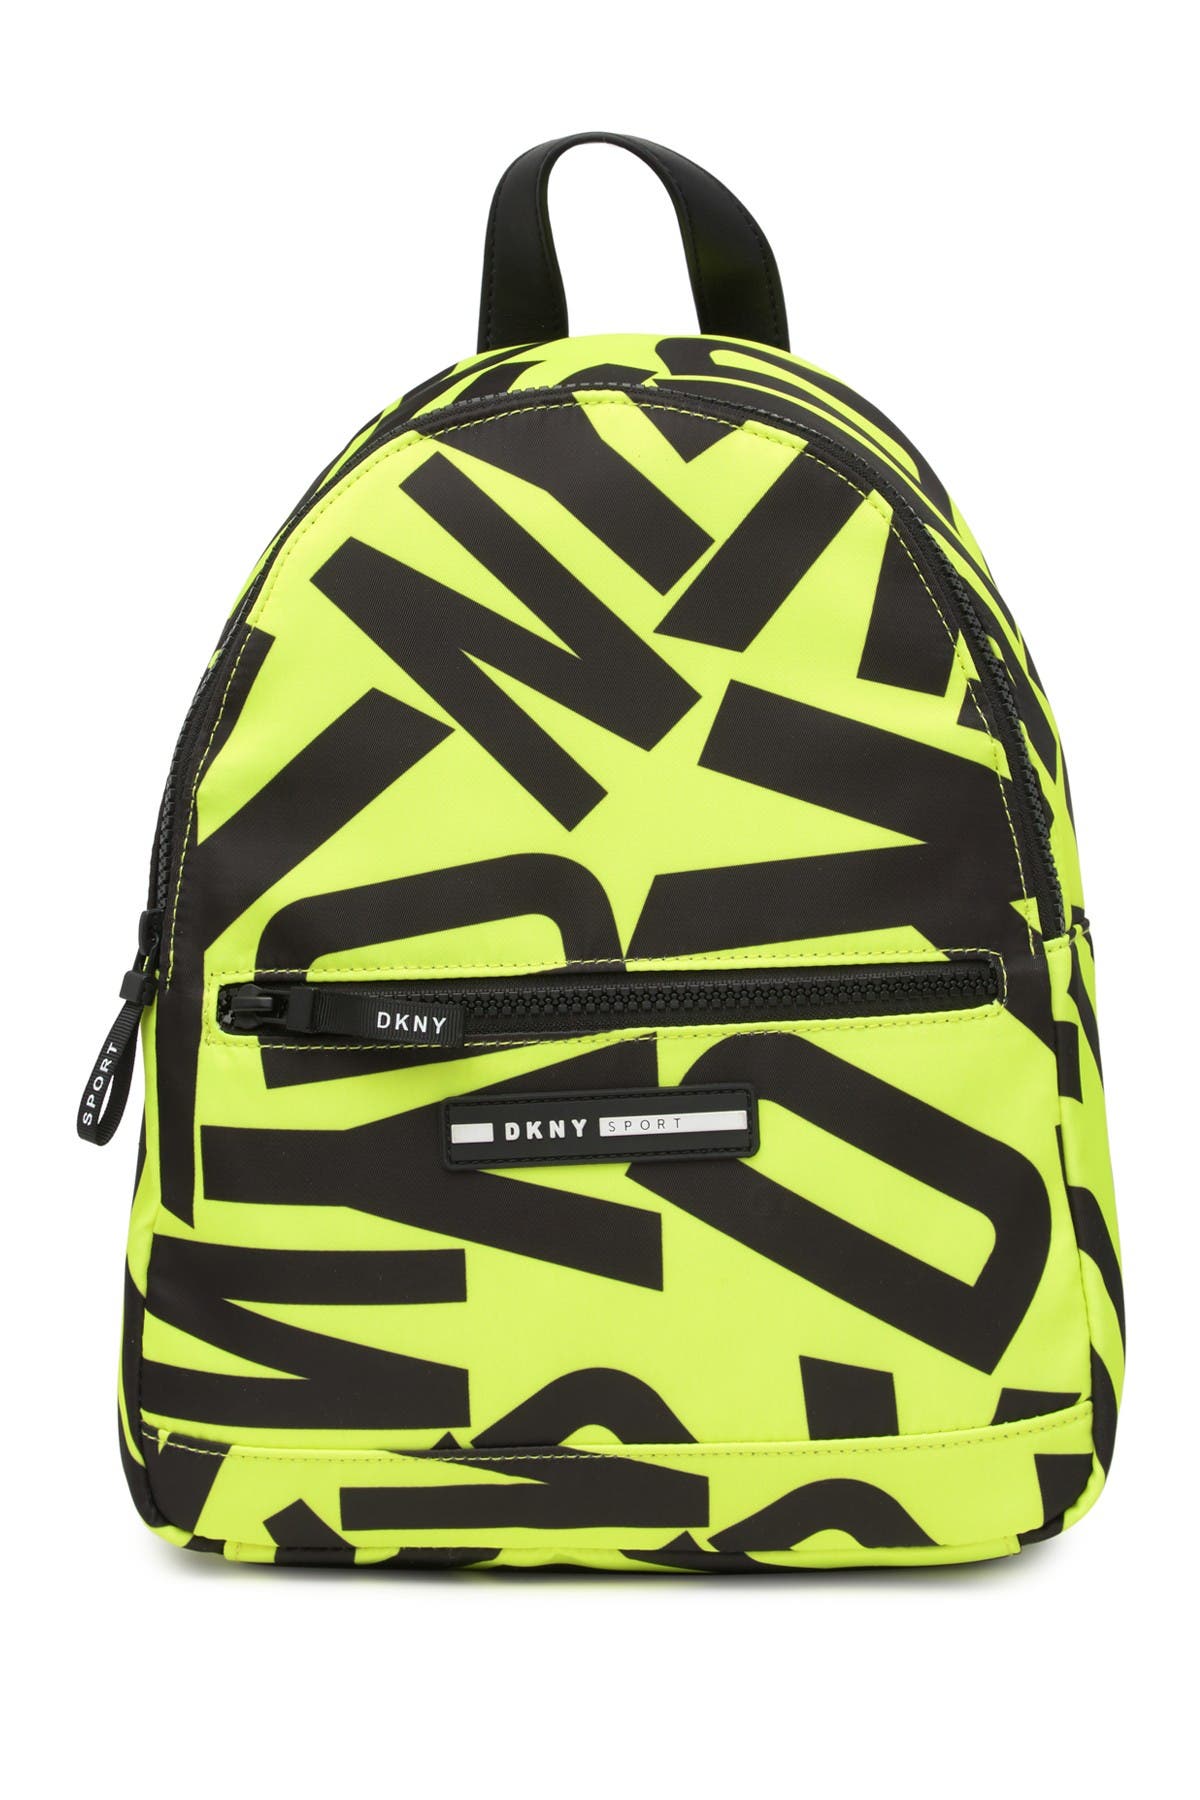 dkny sport backpack